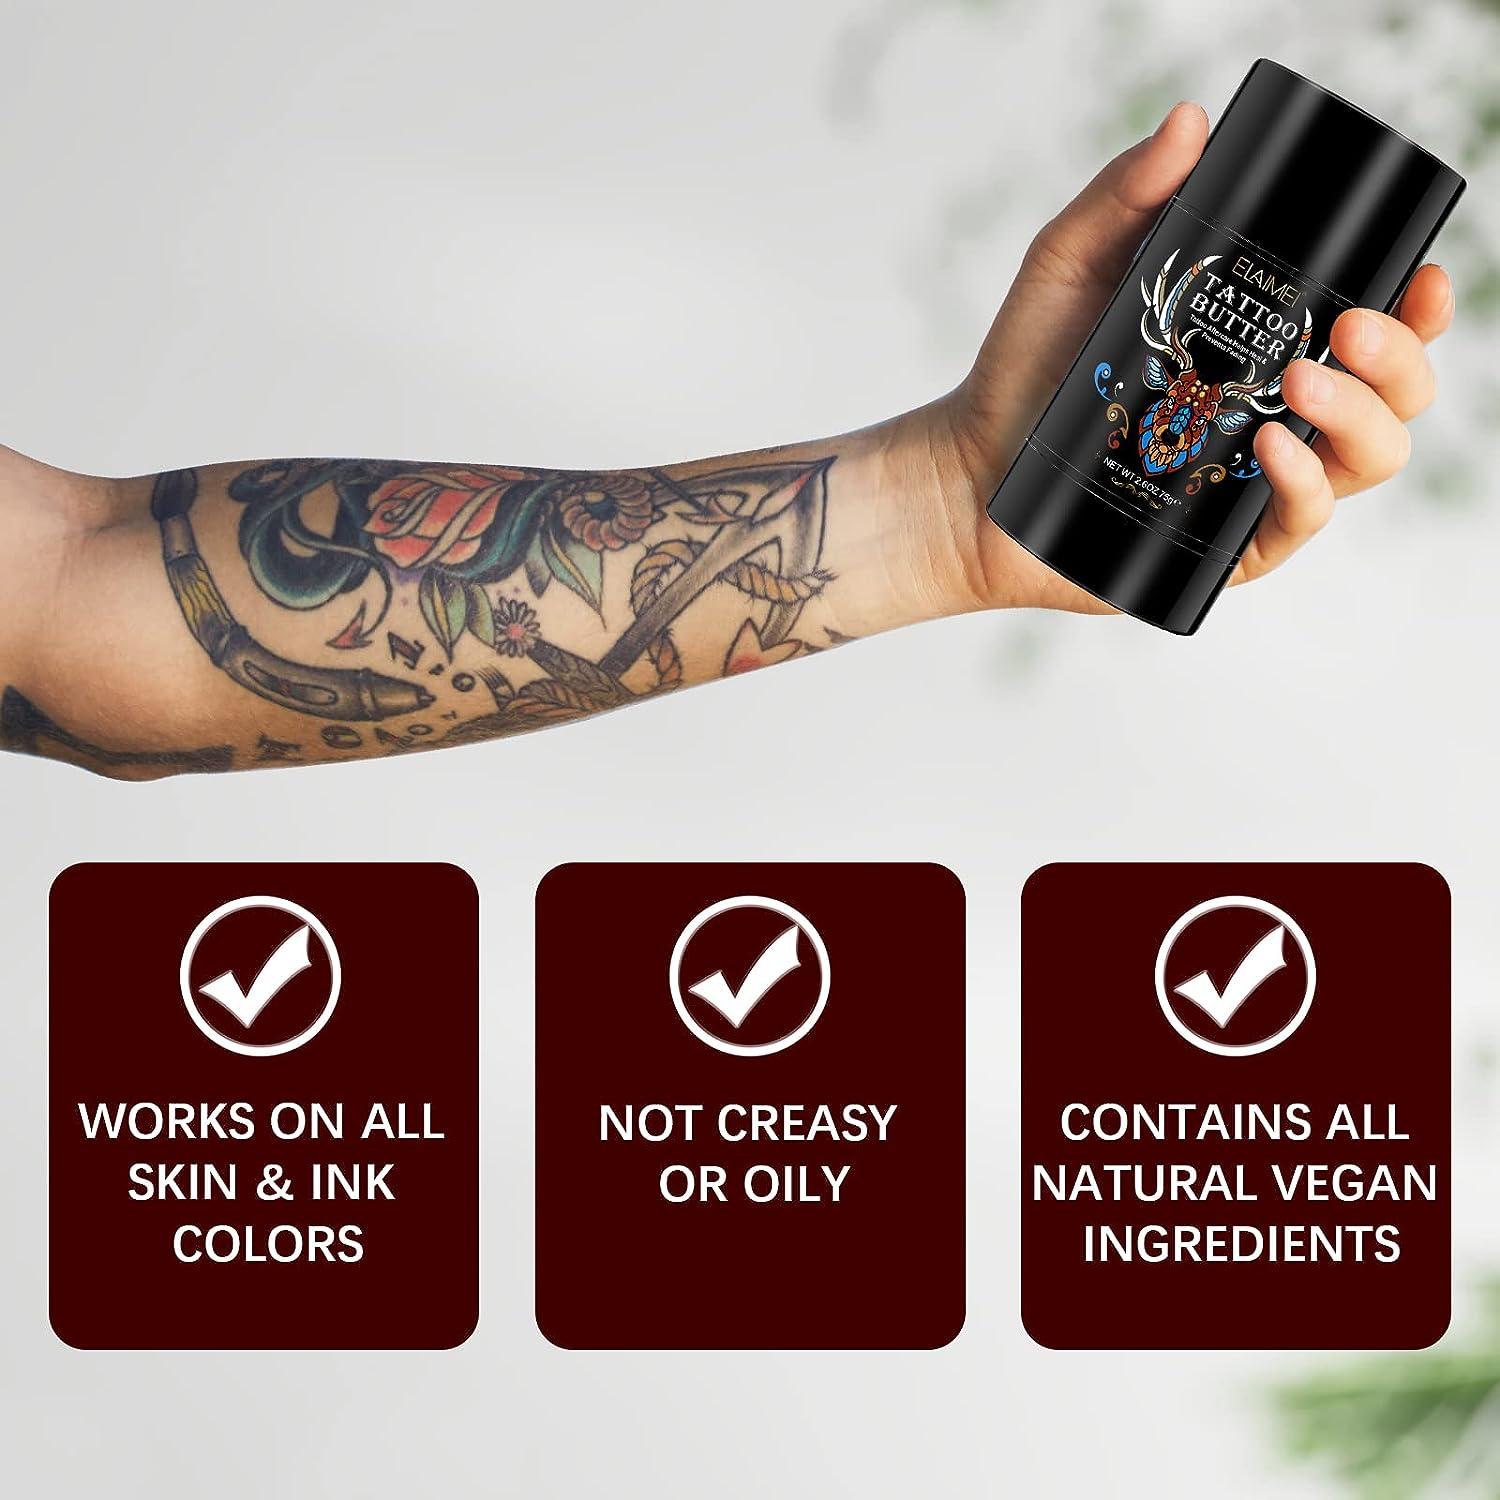 Tattoo Goo Pro Series Professional Process Butter - All-Natural